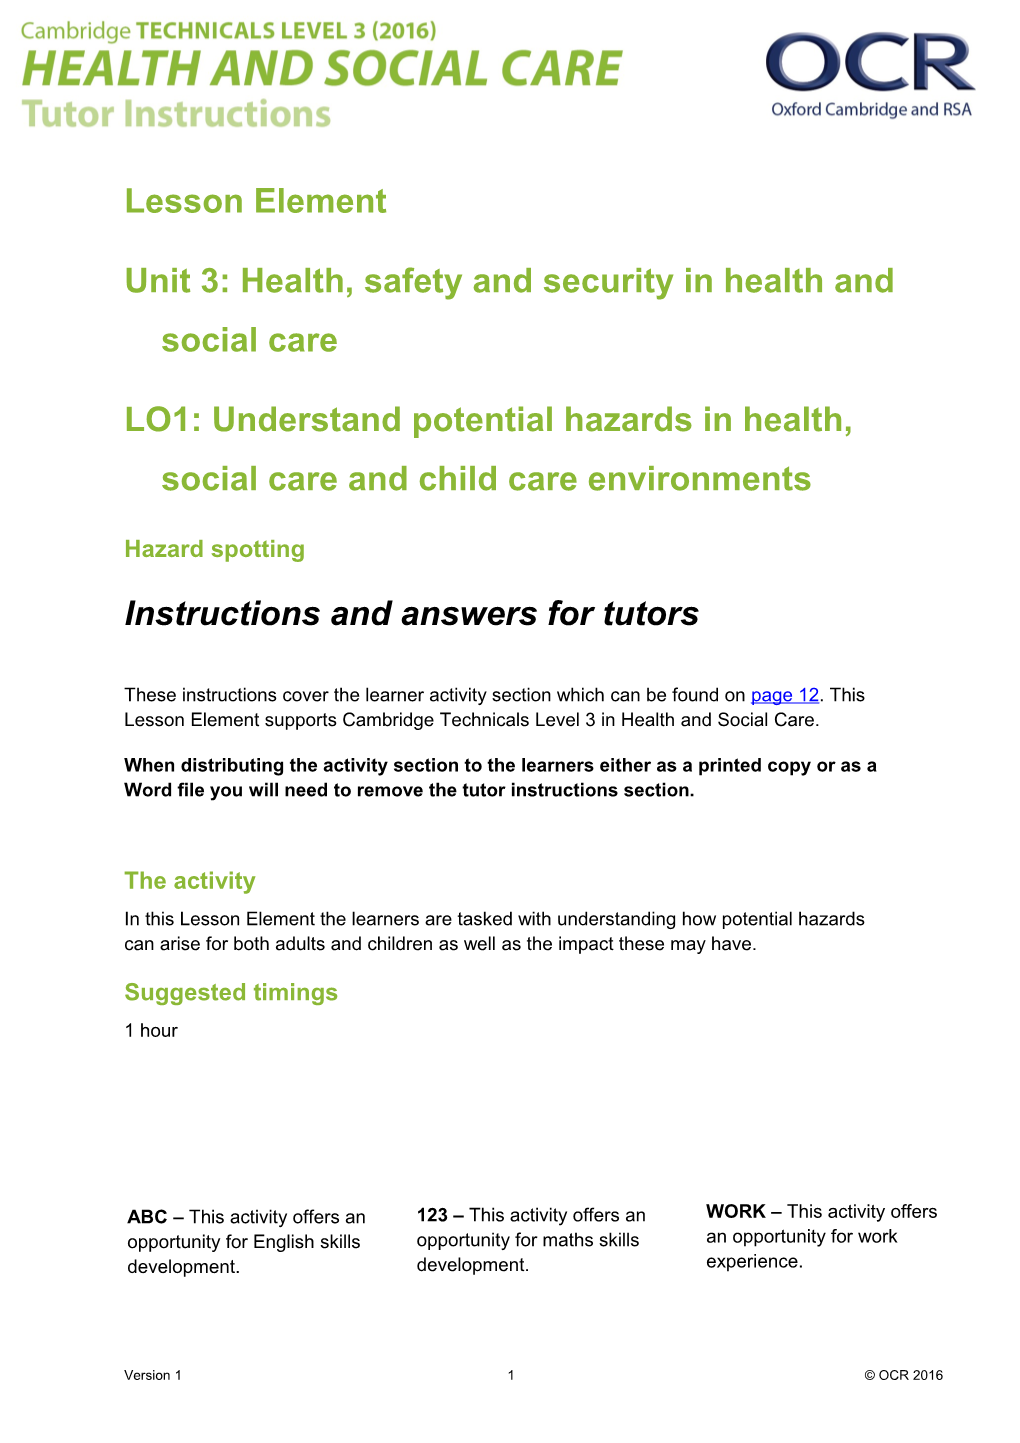 Cambridge Technicals Level 3 Health and Social Care U03 Lesson Element 1